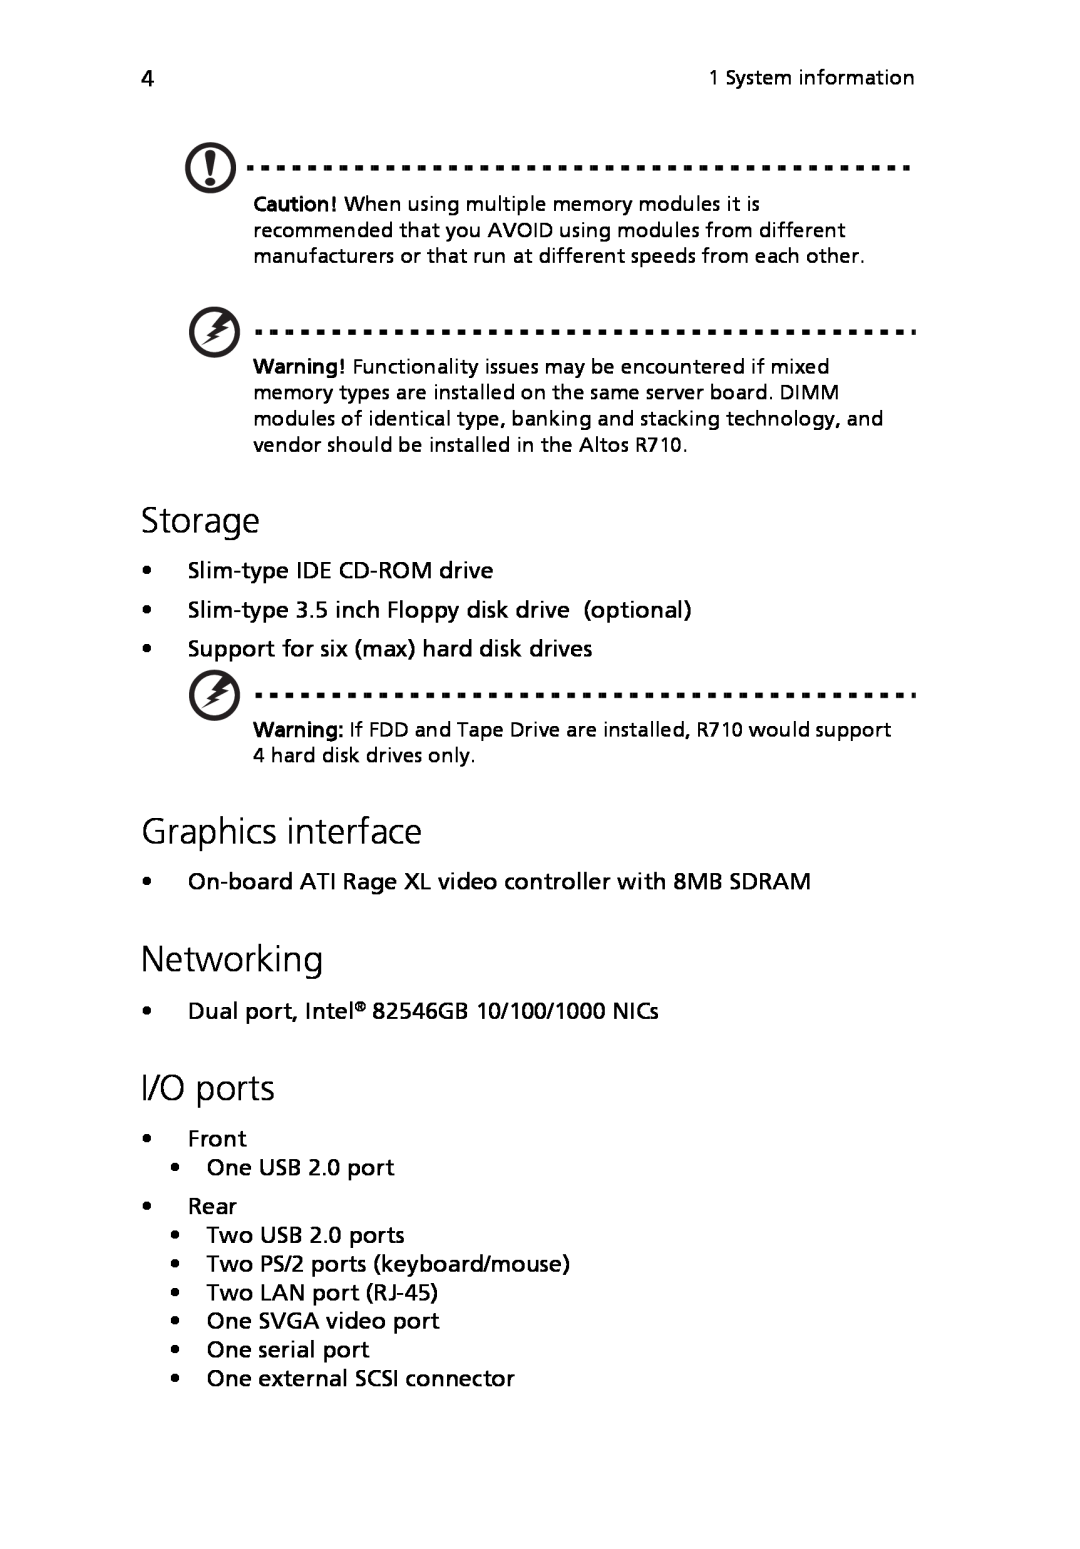 Acer Altos R710 manual Storage, Graphics interface, Networking, I/O ports 